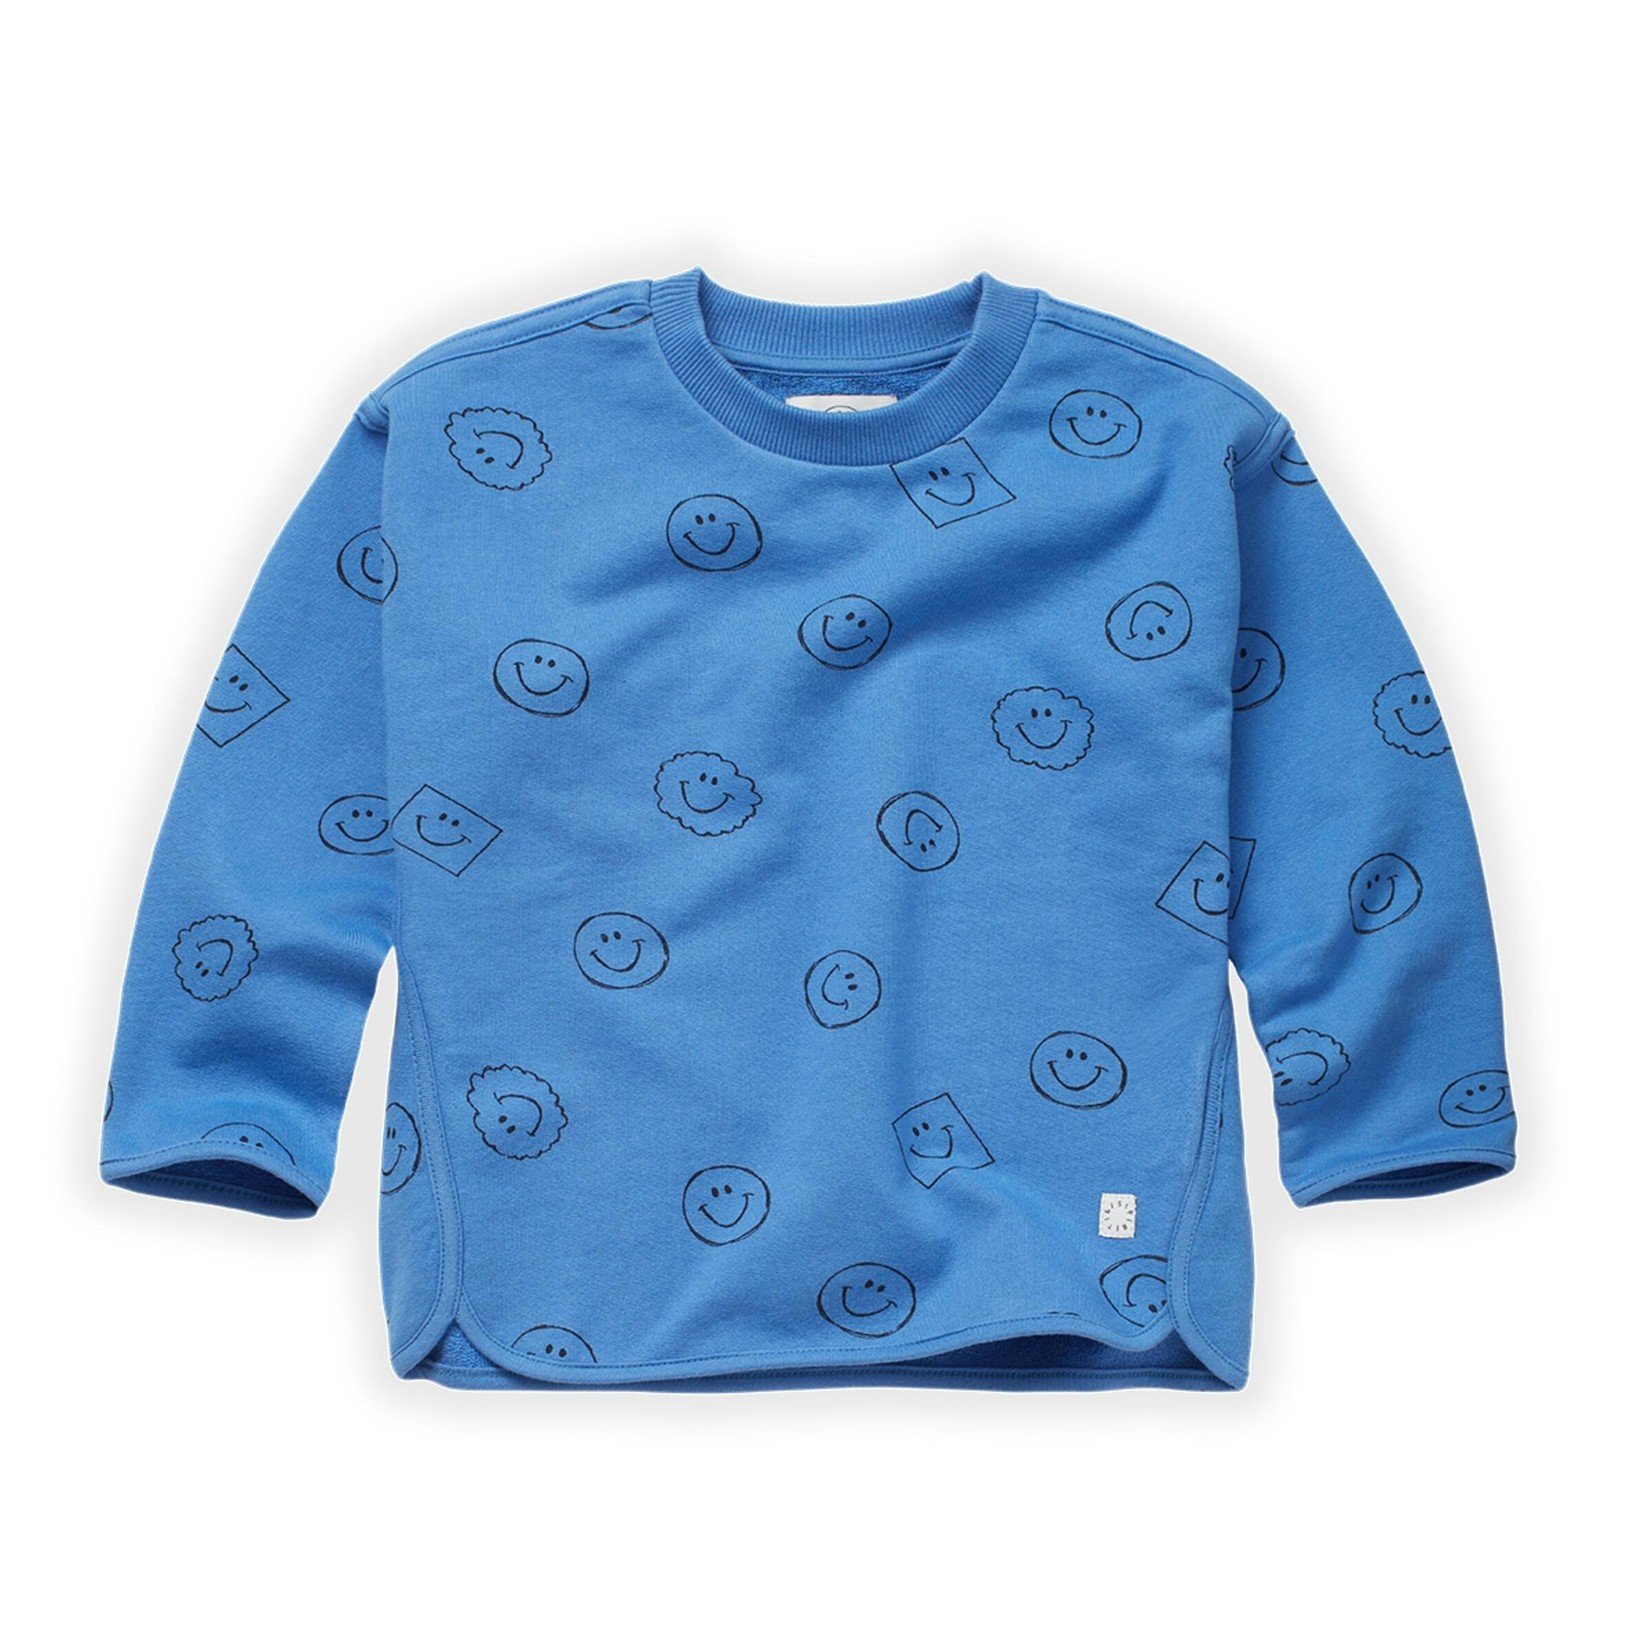 Sproet & Sprout S&S - Sweatshirt Smiley - Molecule Blue